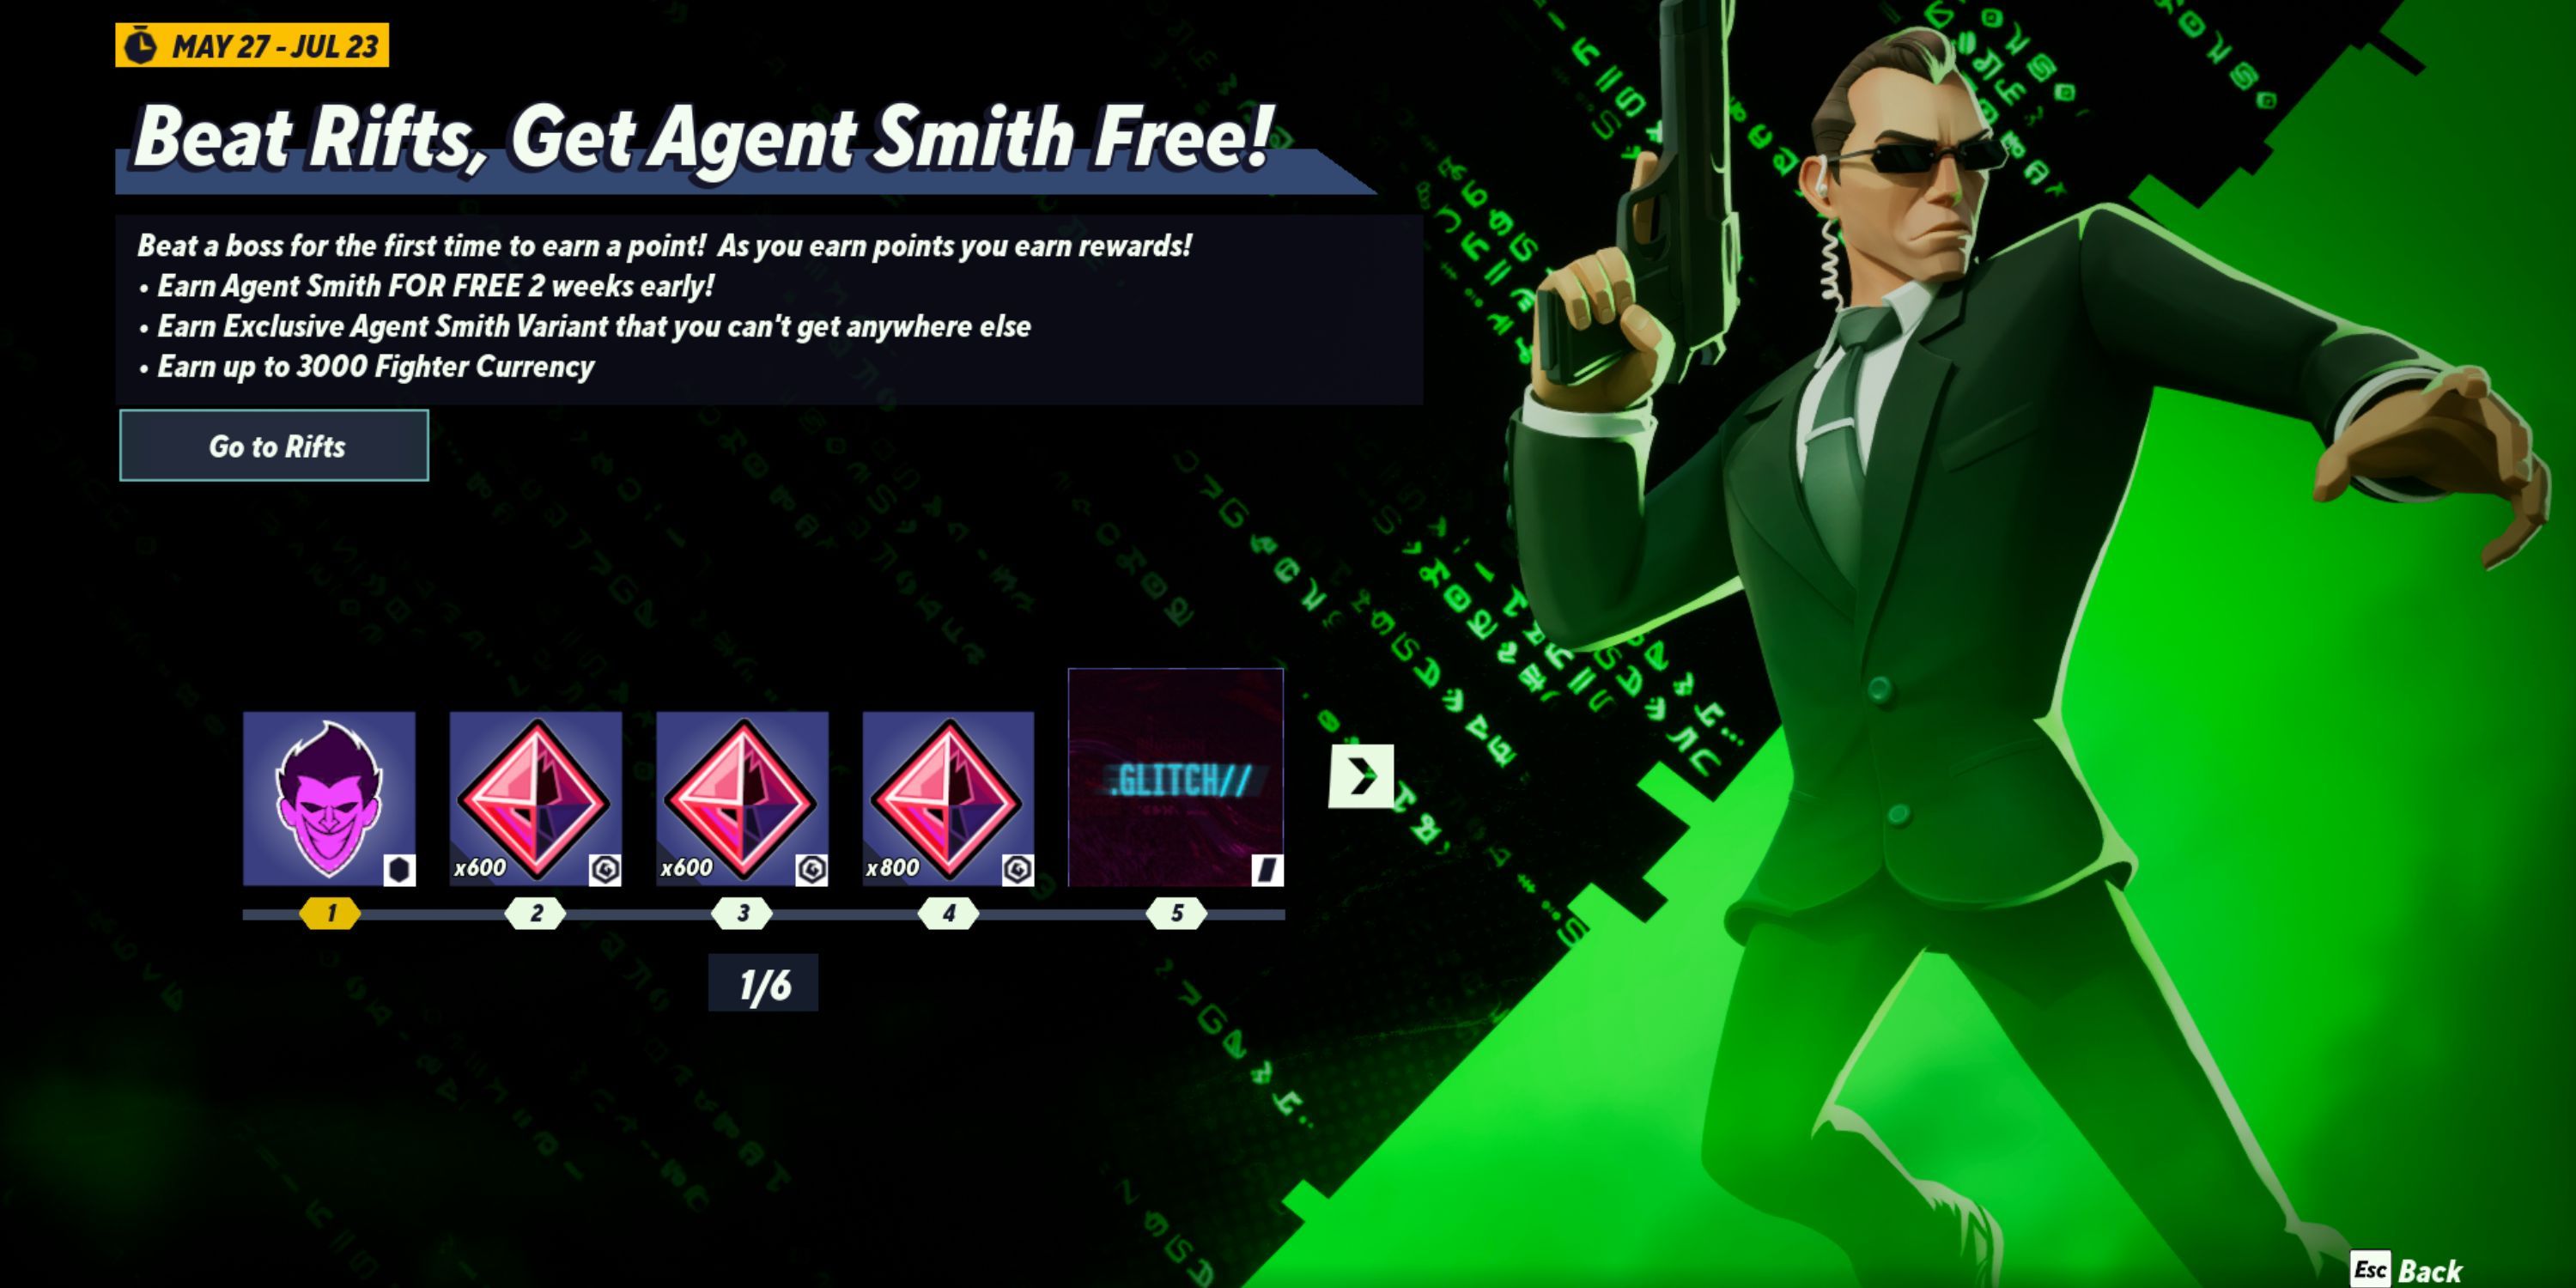 agent smith event multiversus